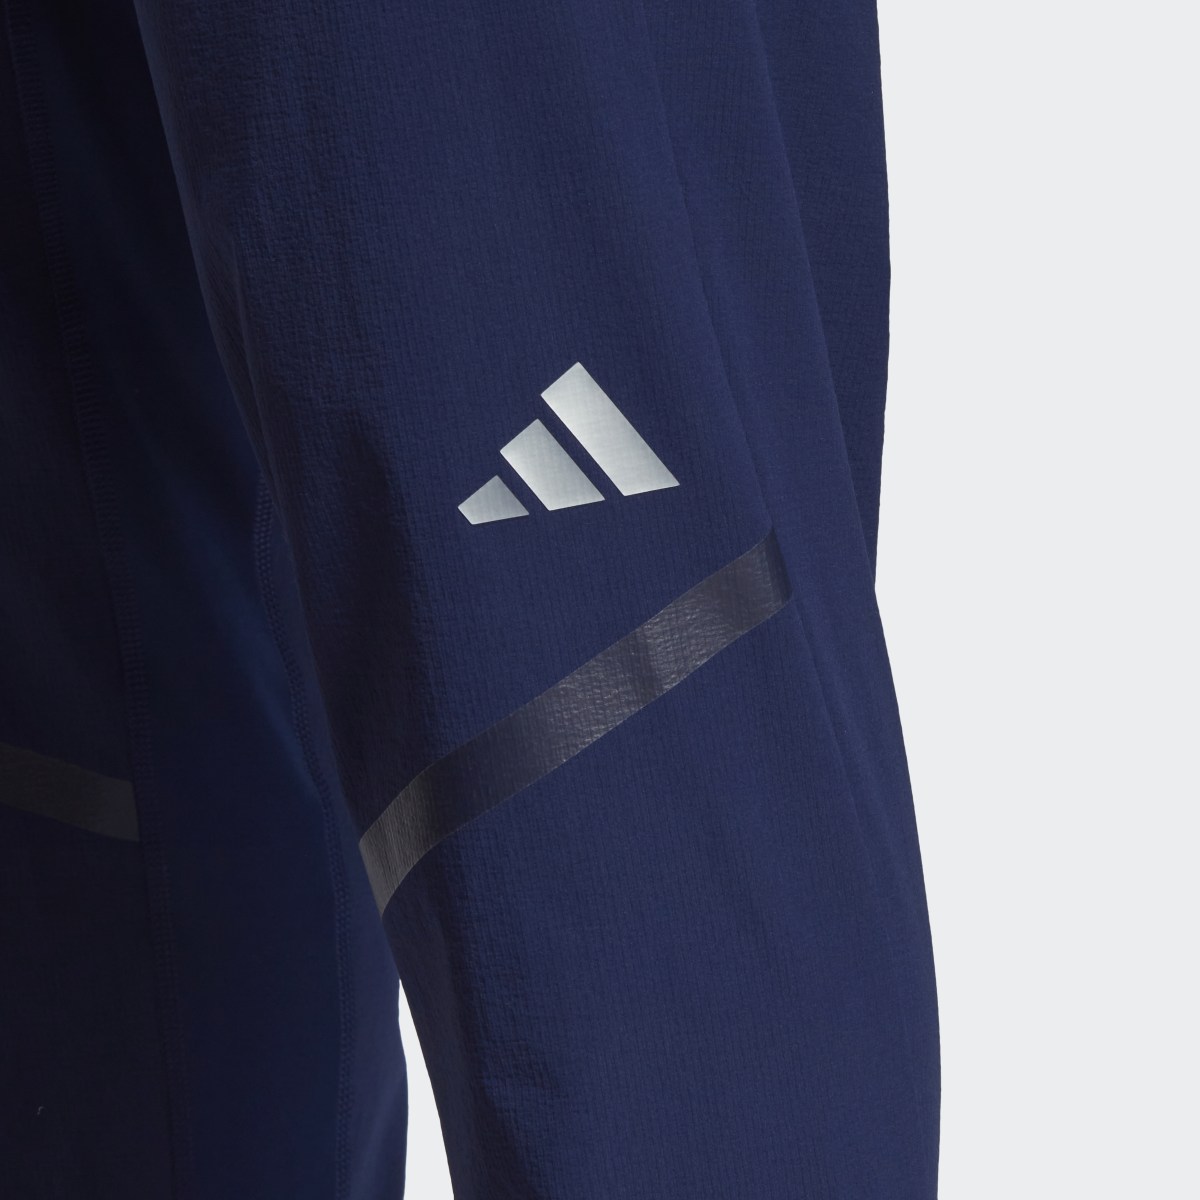 Adidas Designed for Training CORDURA® Workout Pants. 5